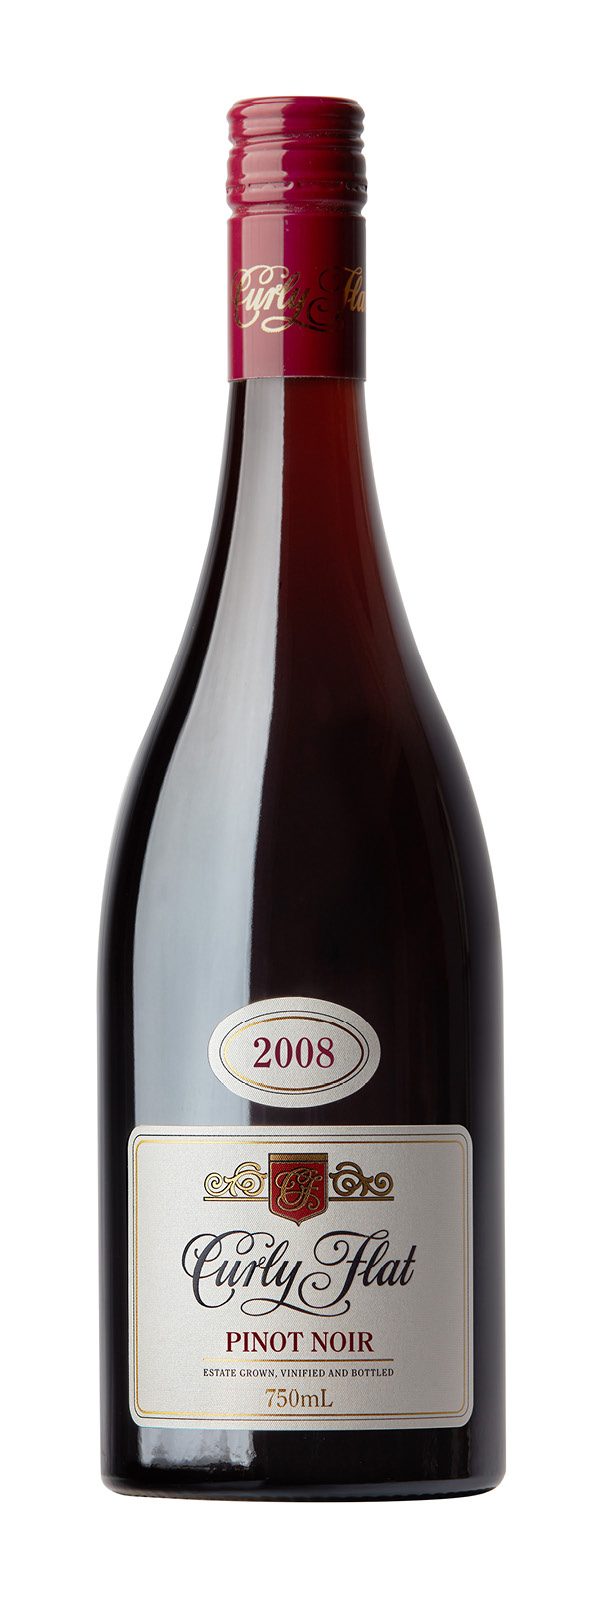 2008 Curly Flat Pinot Noir